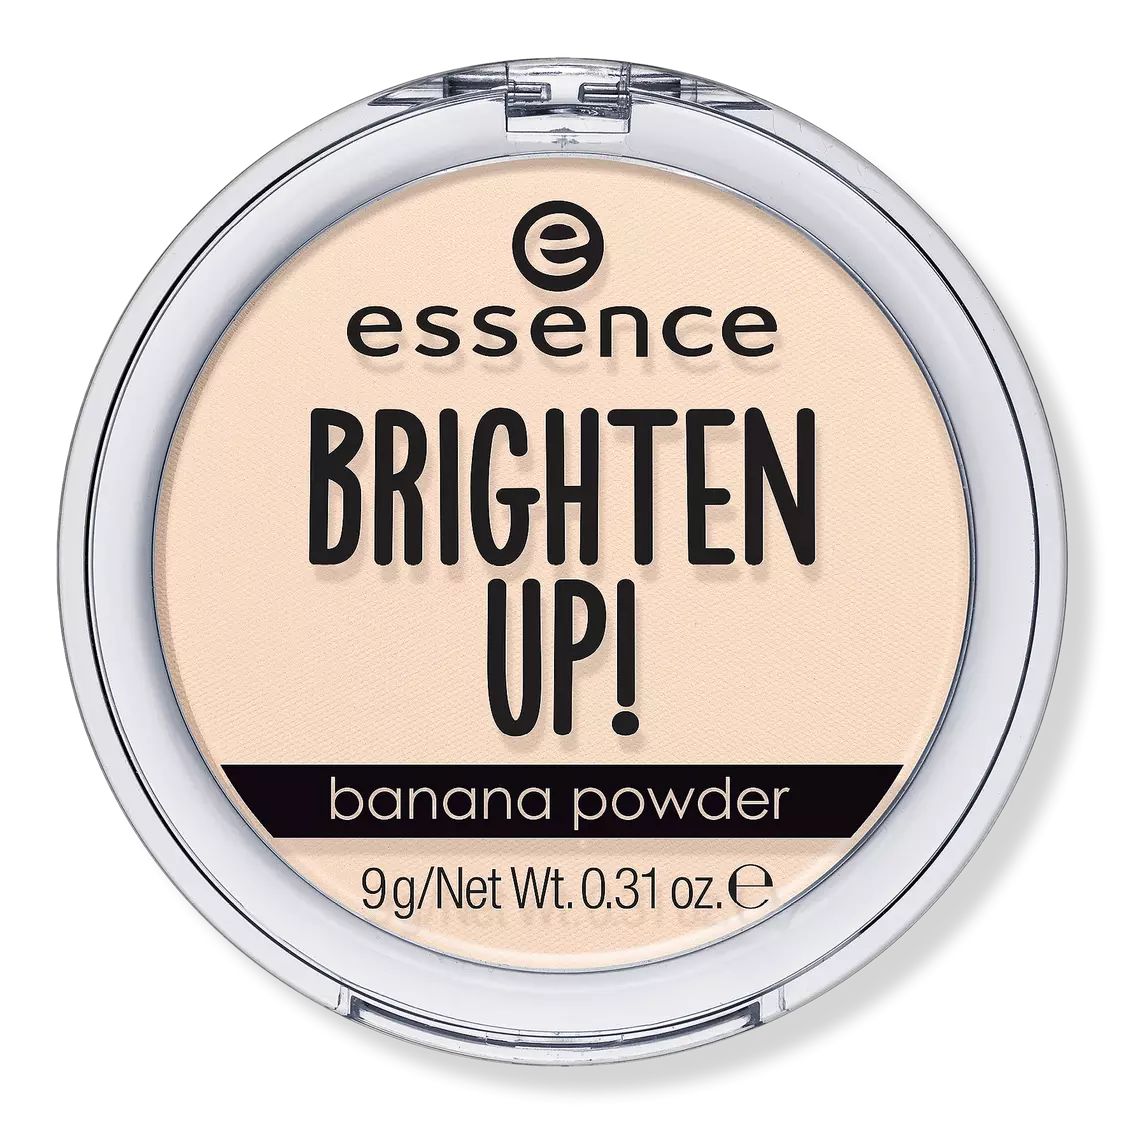 Brighten Up! Banana Powder - Essence | Ulta Beauty | Ulta